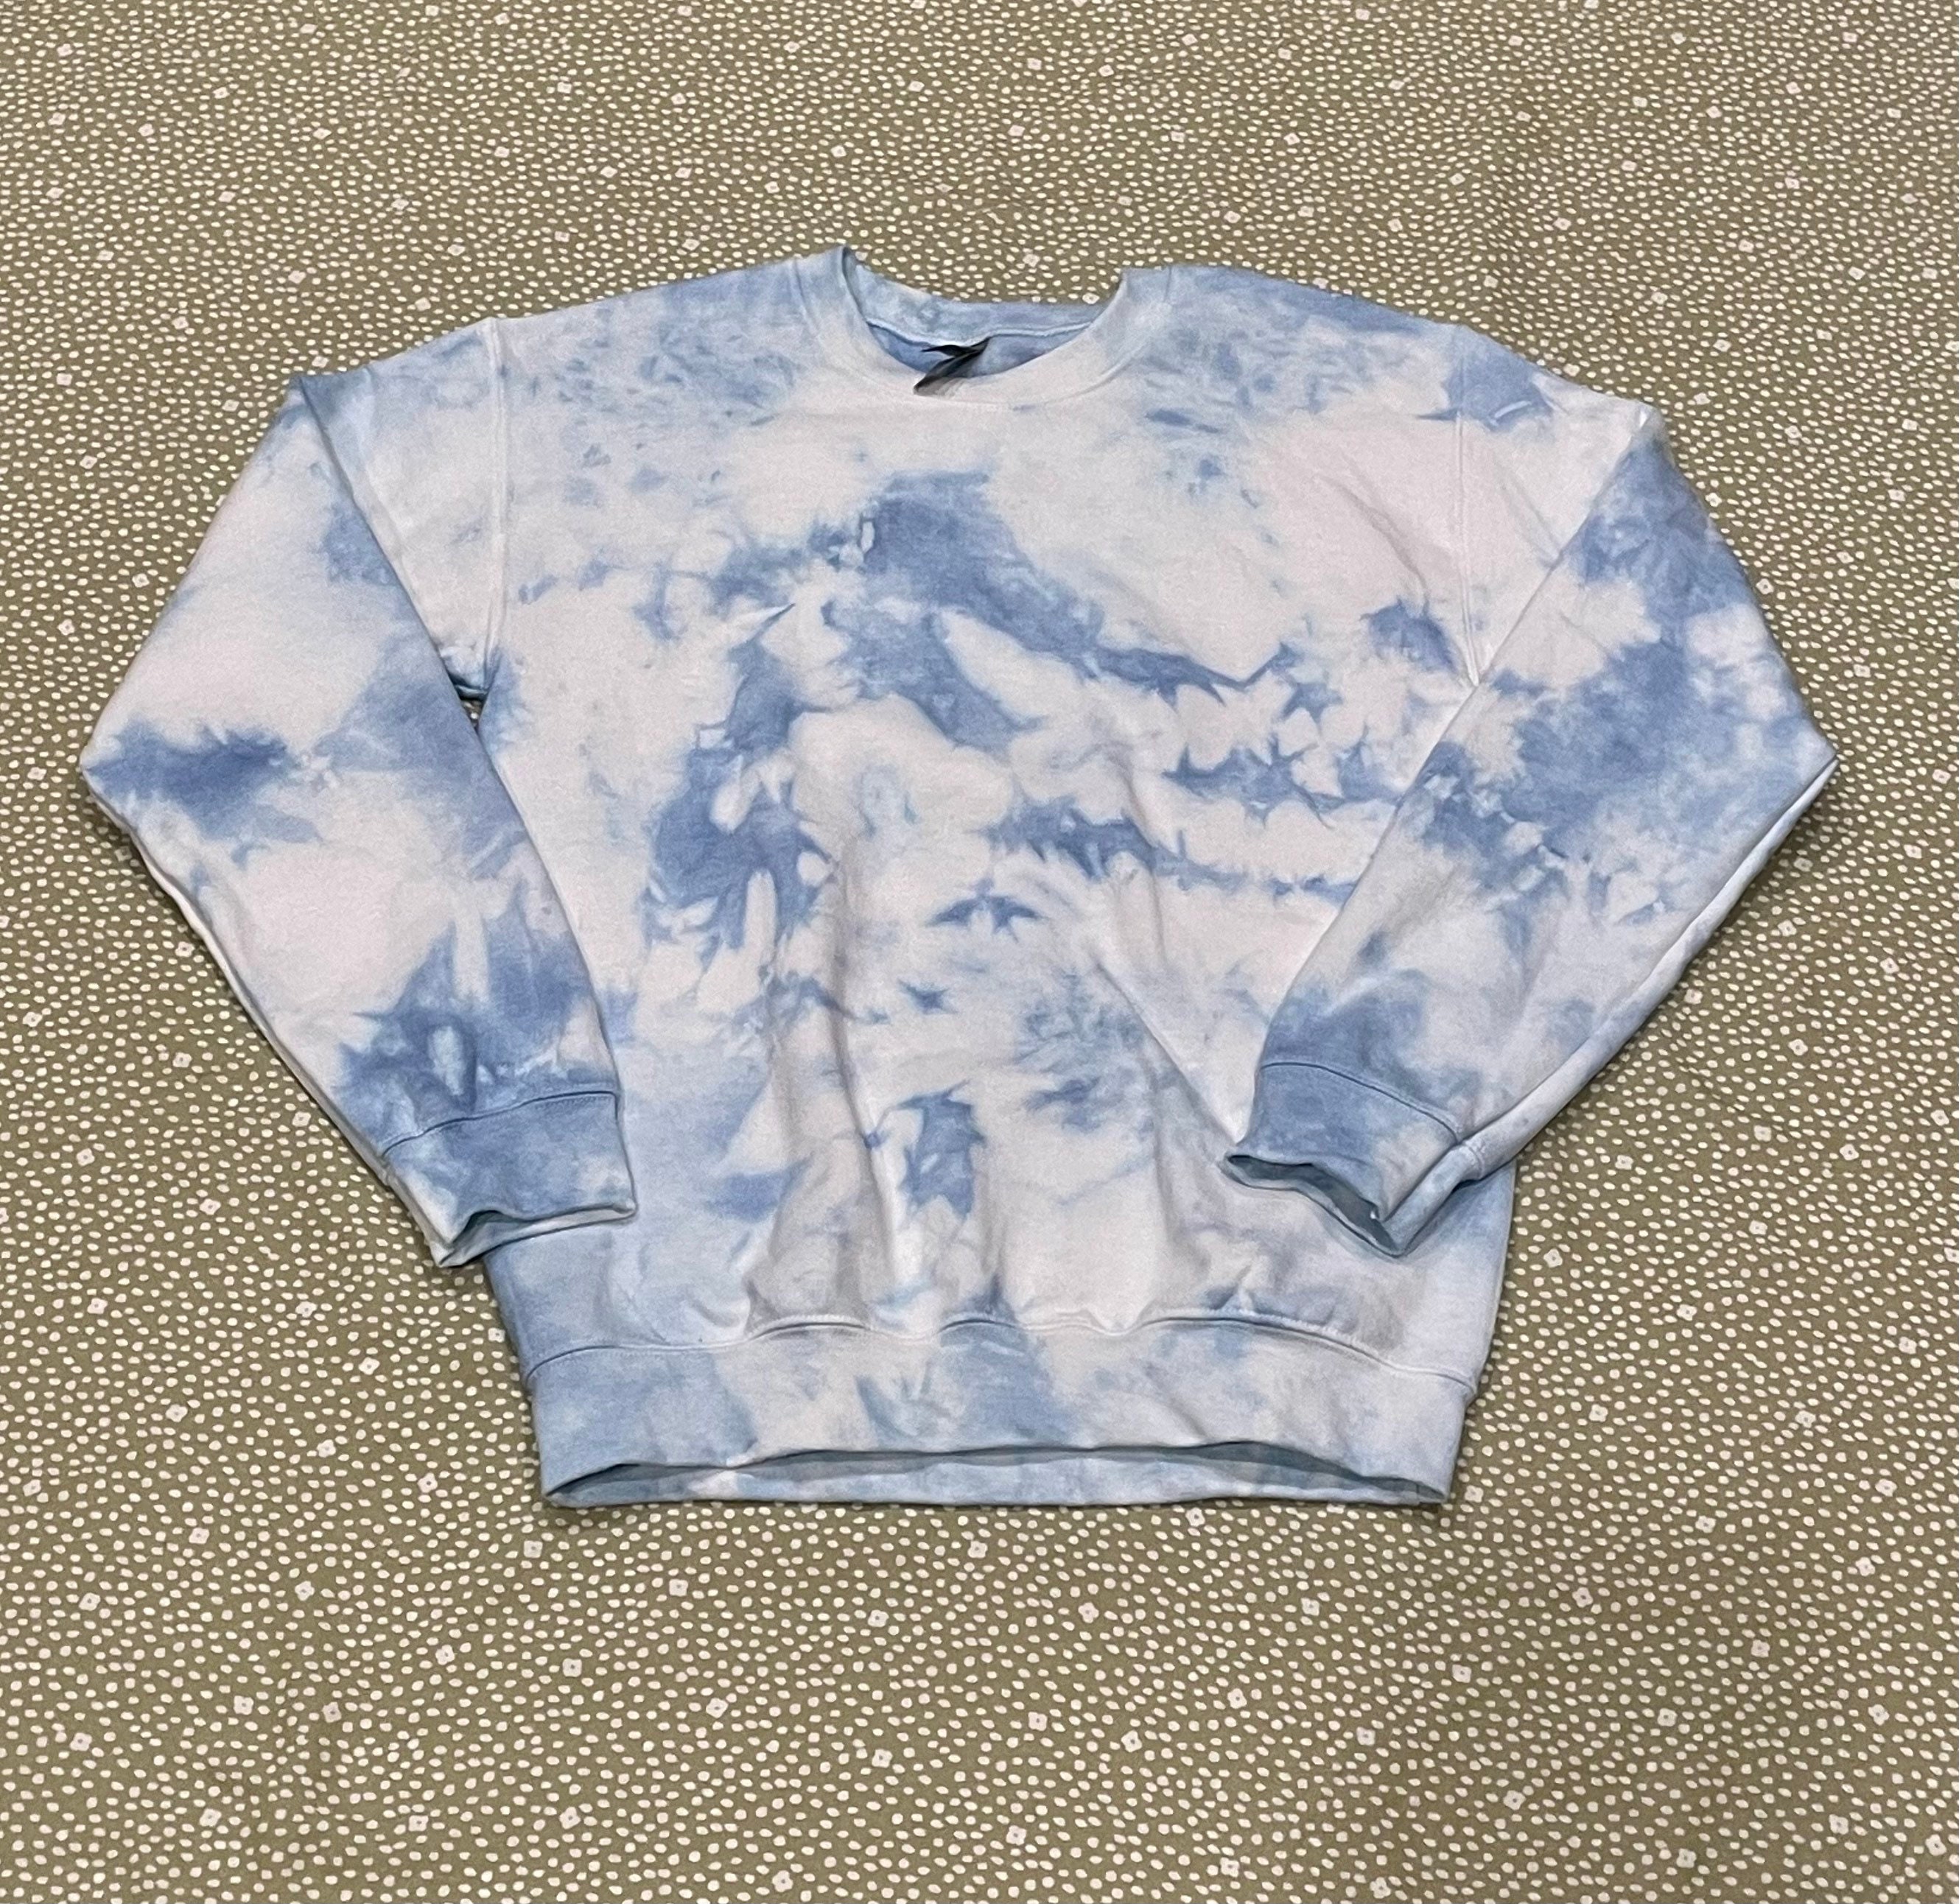 Cloud x Black Tie Dye Short Sleeve T-Shirt (9 Color Options) – The Tie Dye  Company